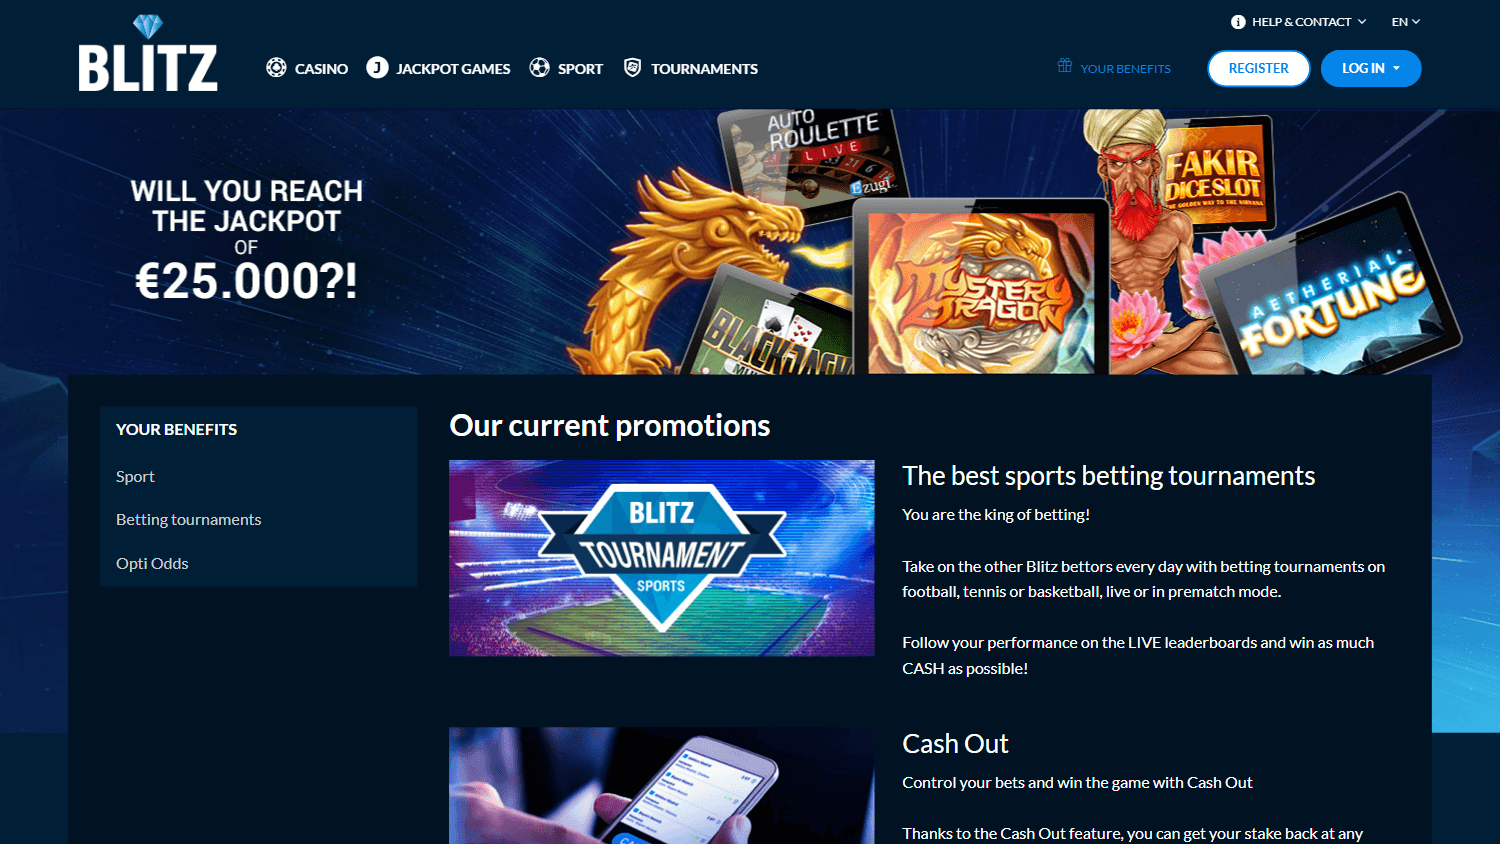 blitz_casino_promotions_desktop